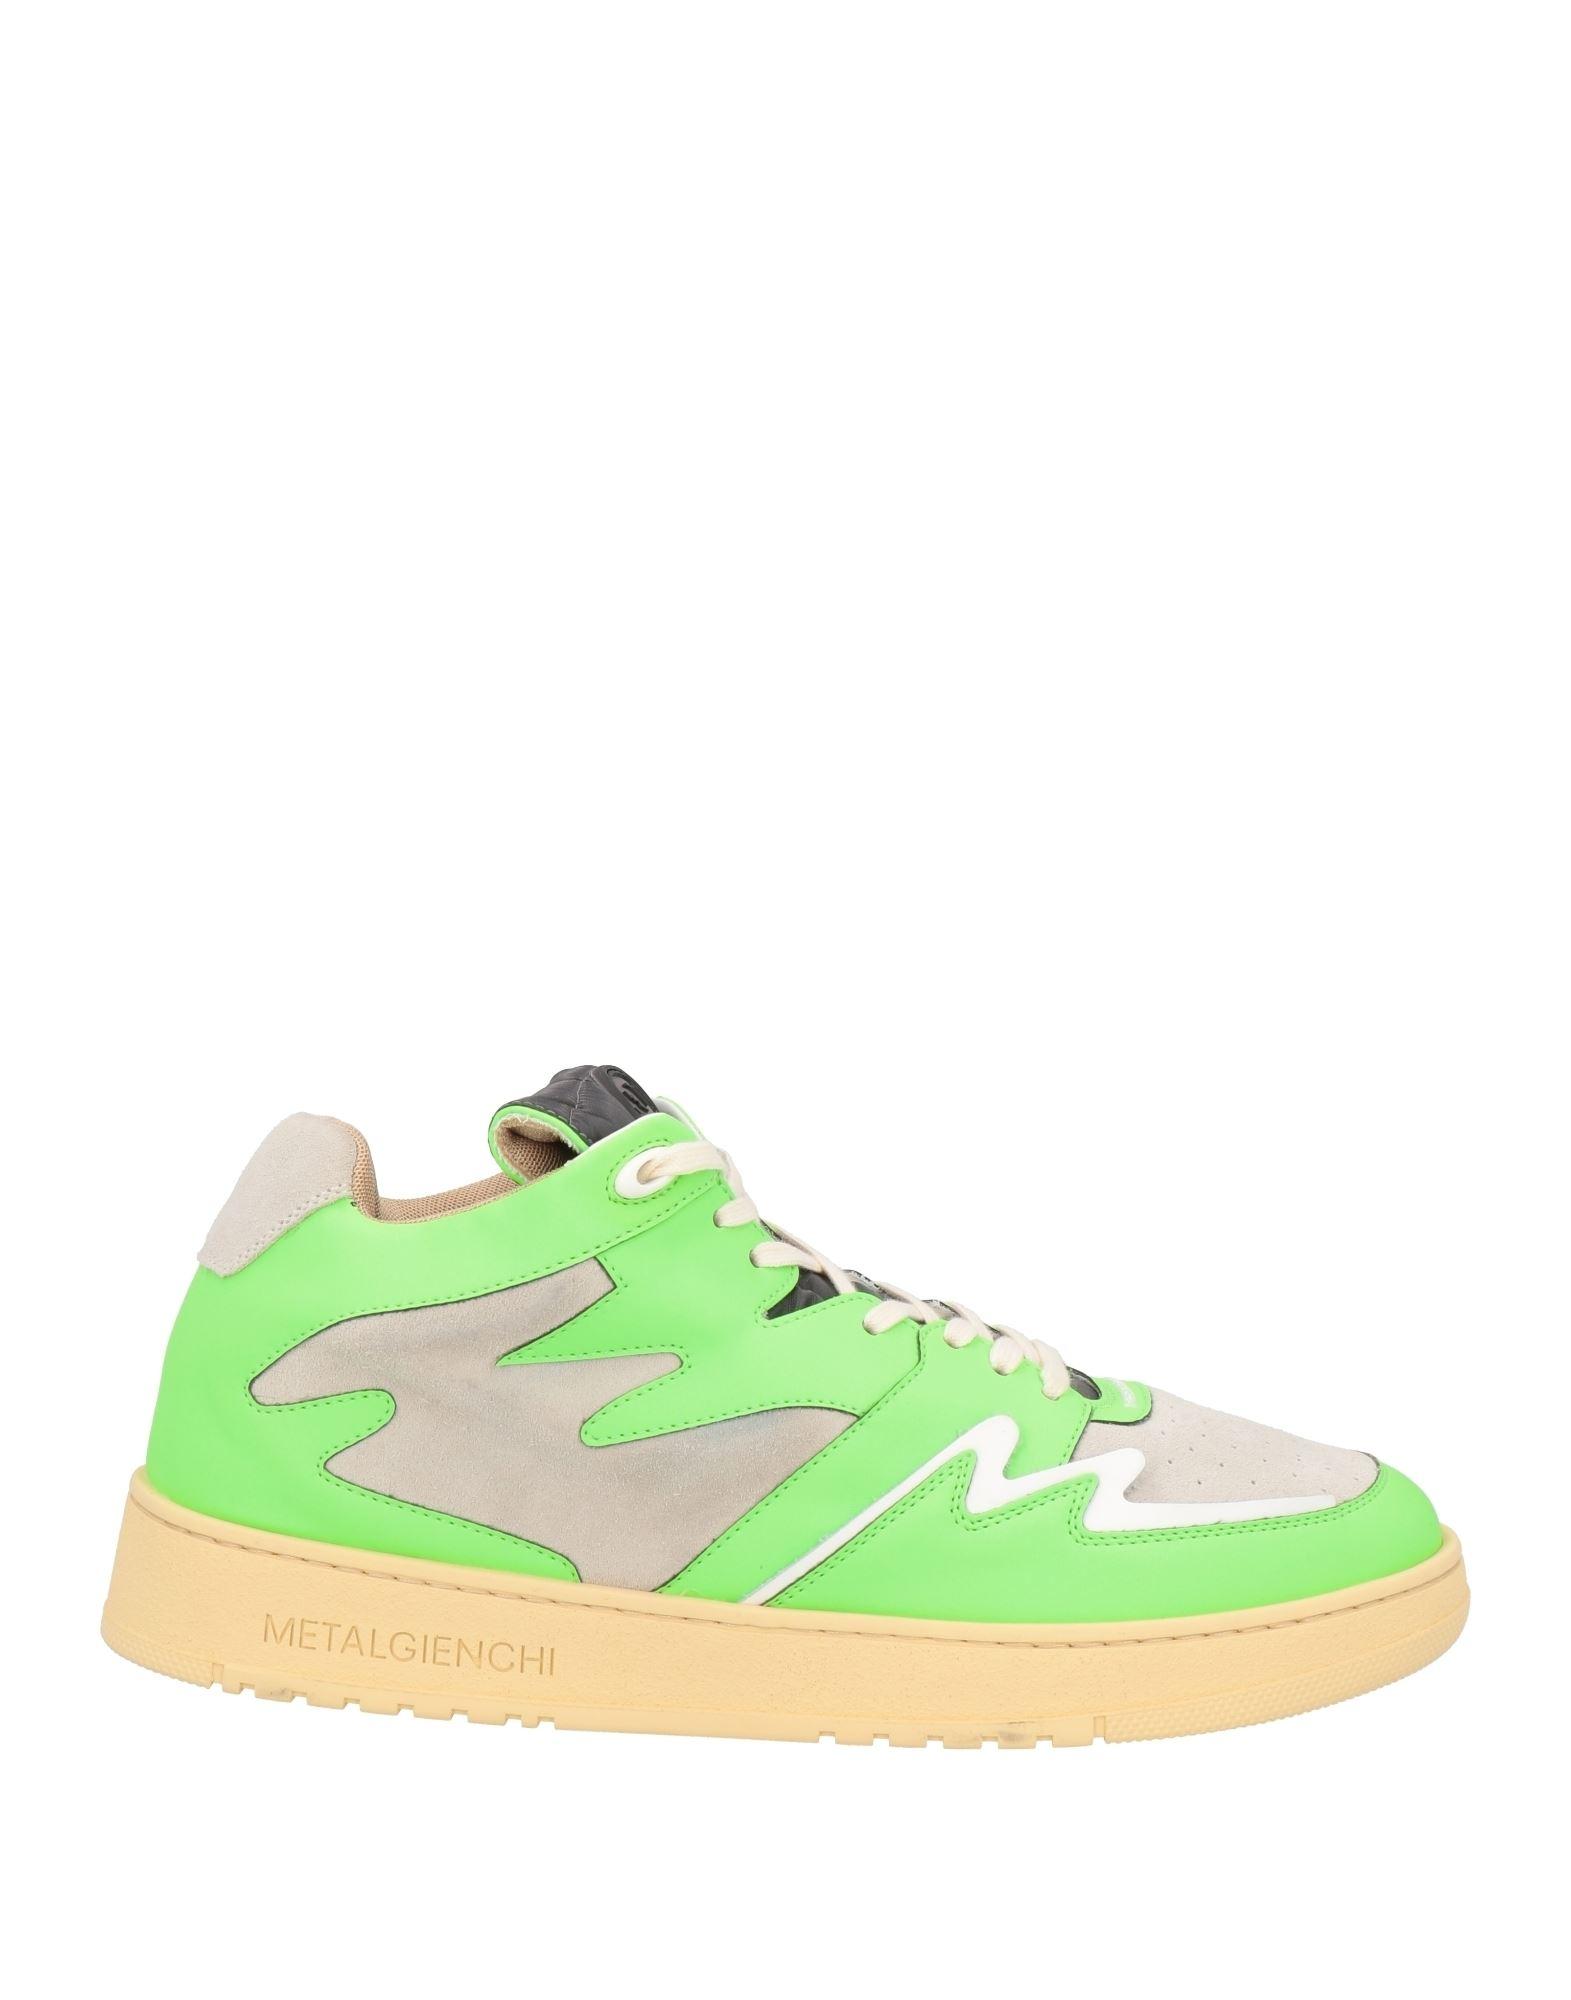 METAL GIENCHI Sneakers in Green for Men | Lyst